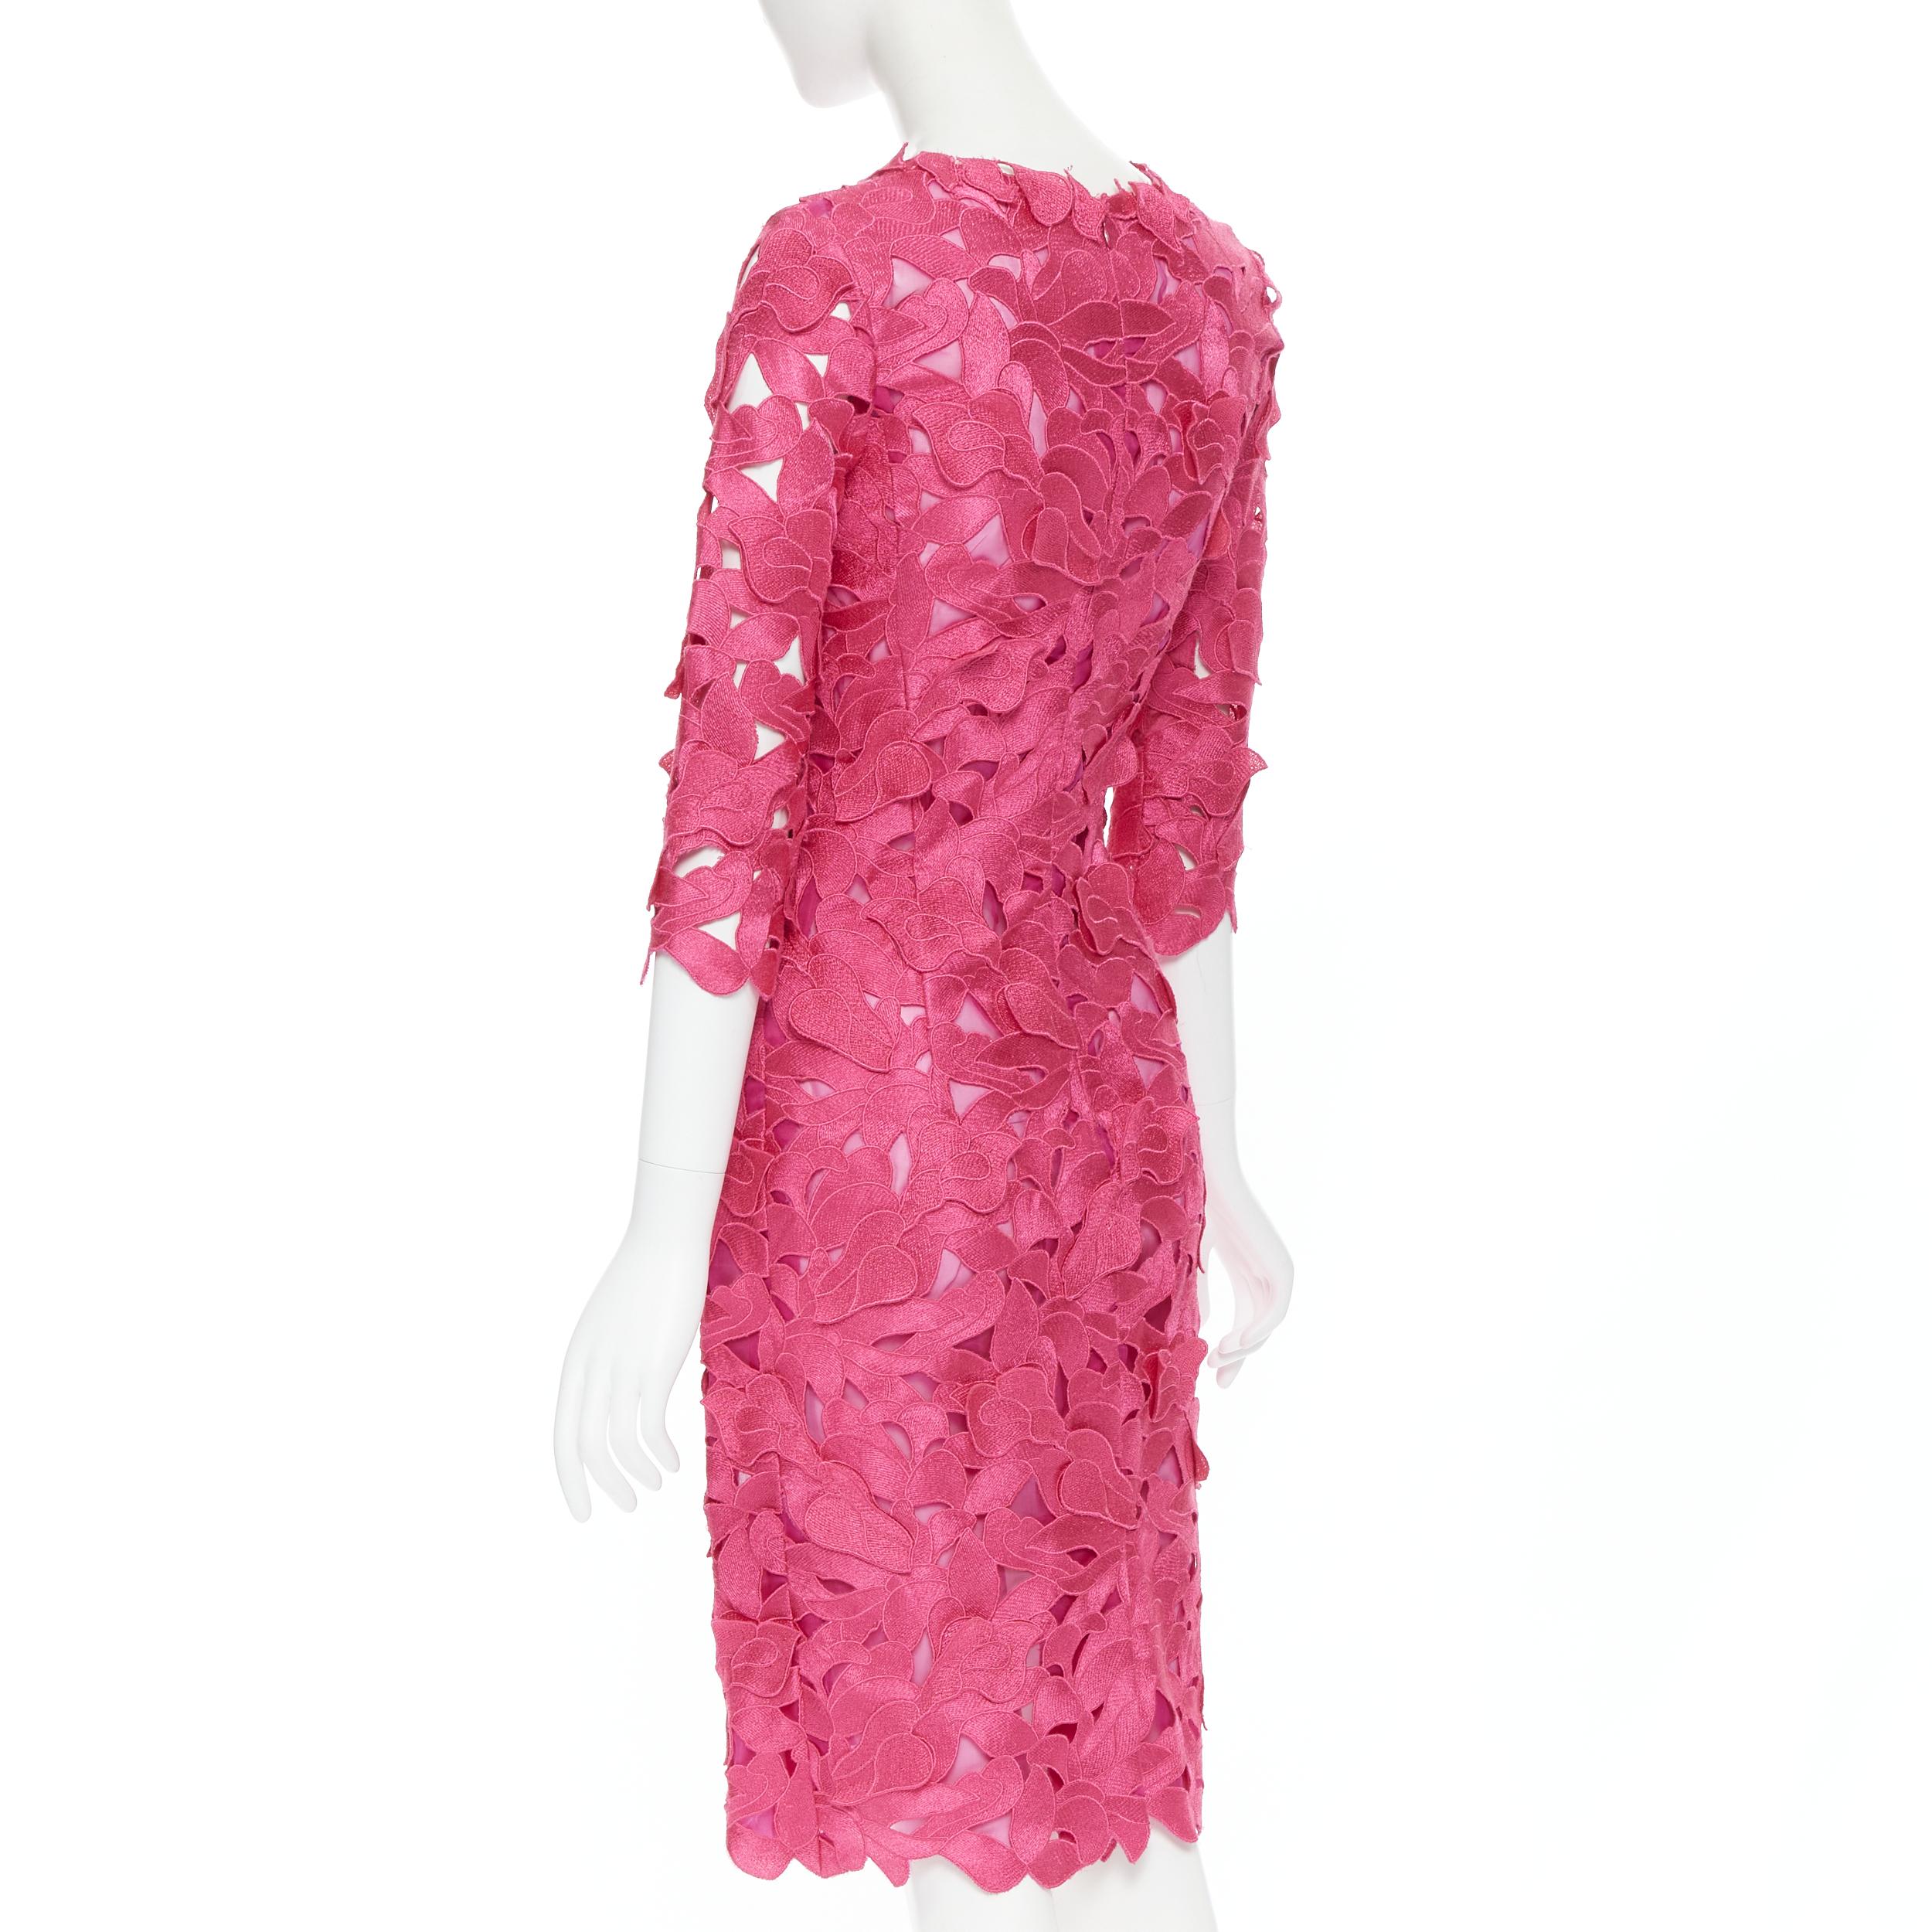 Women's OSCAR DE LA RENTA fuchsia pink floral print 3/4 sleeve cocktail dress XS